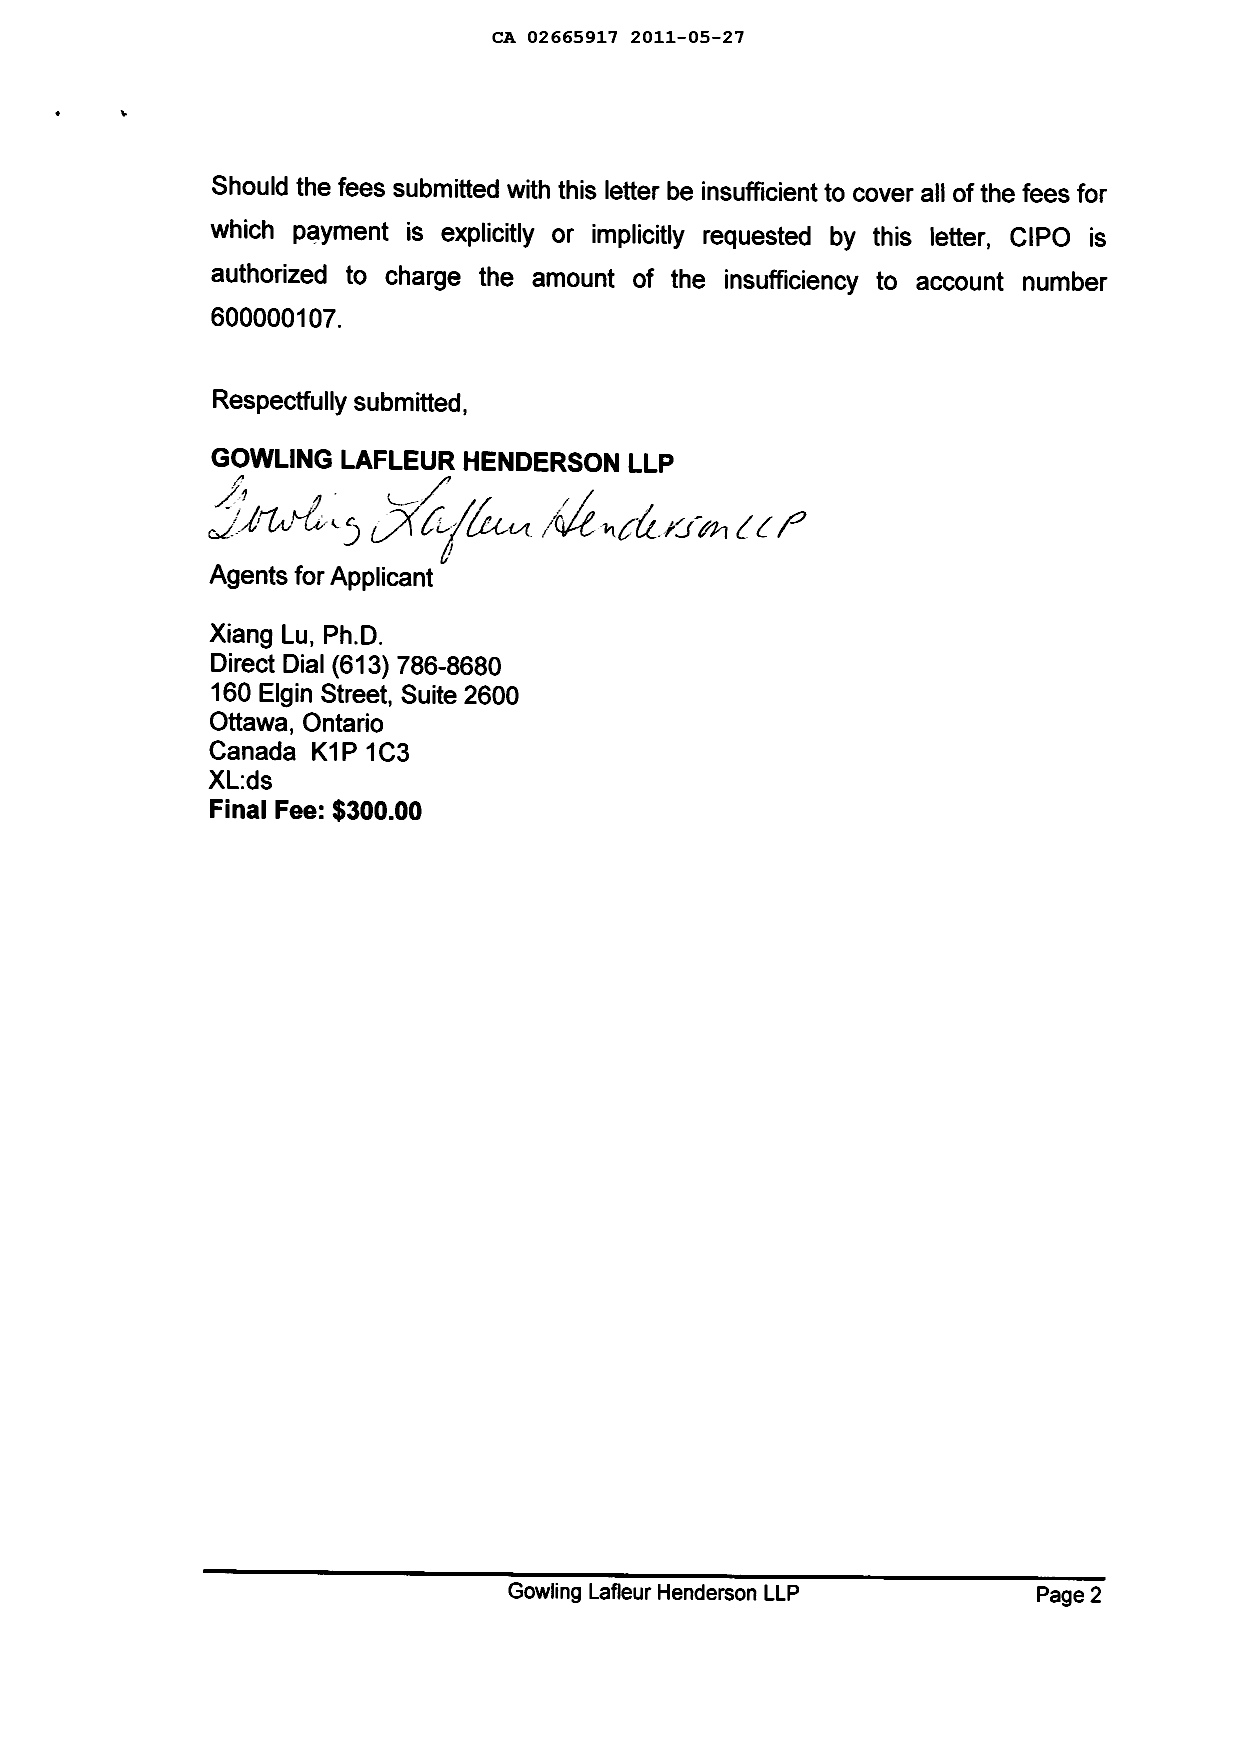 Canadian Patent Document 2665917. Correspondence 20110527. Image 2 of 2